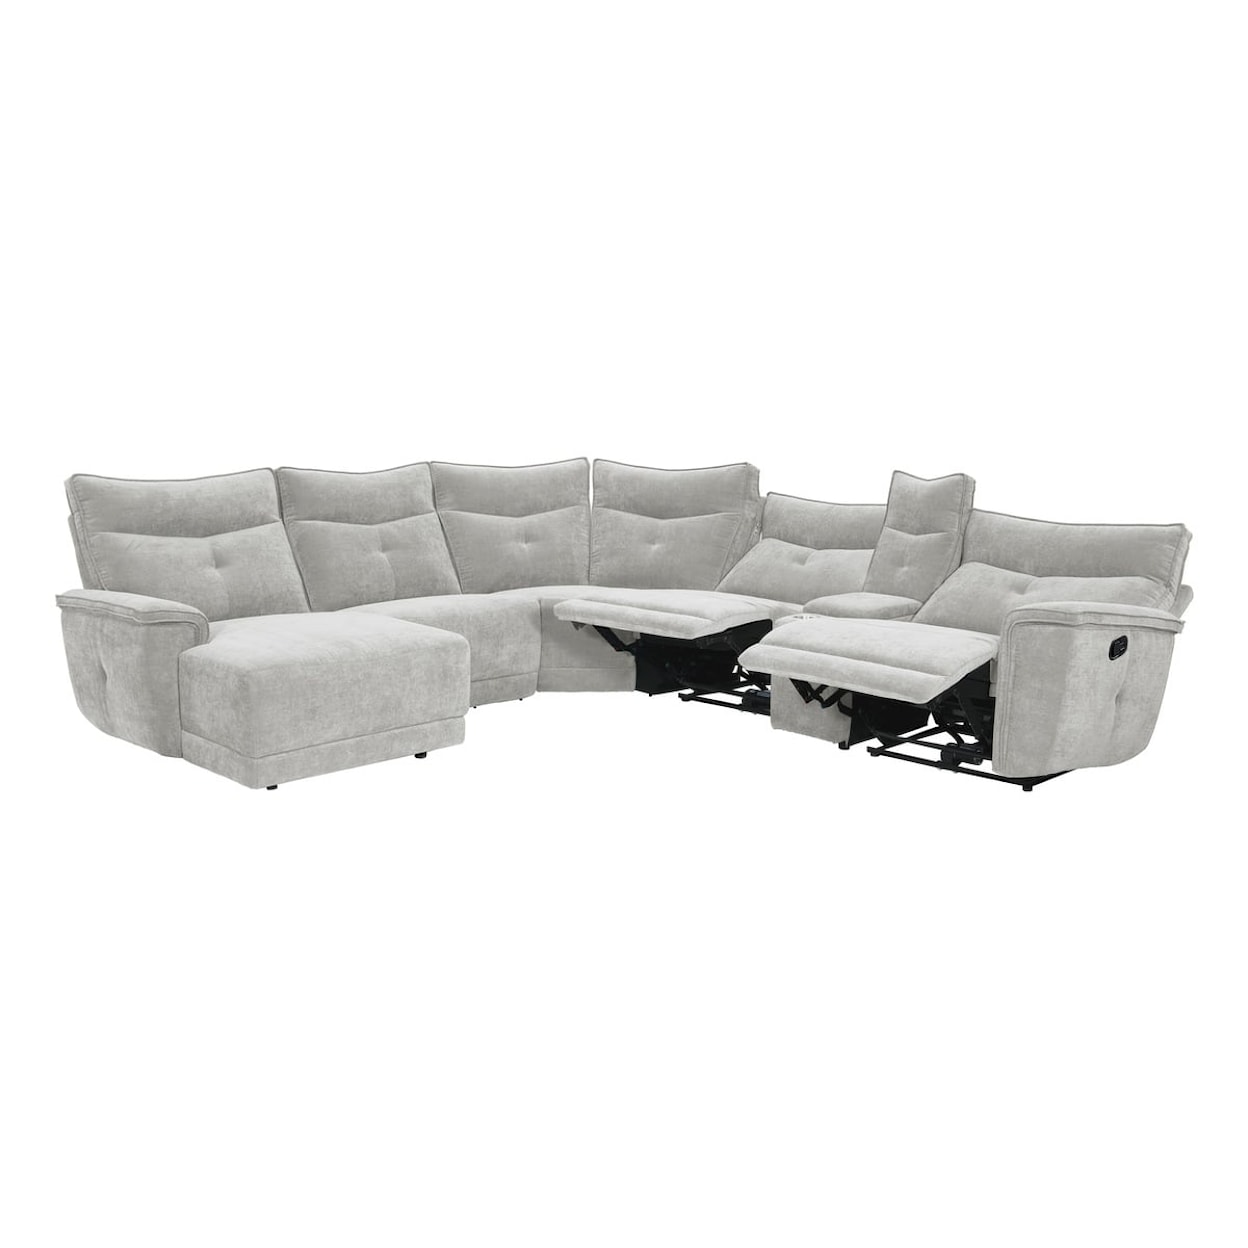 Homelegance Tesoro 6-Piece Modular Reclining Sectional Sofa